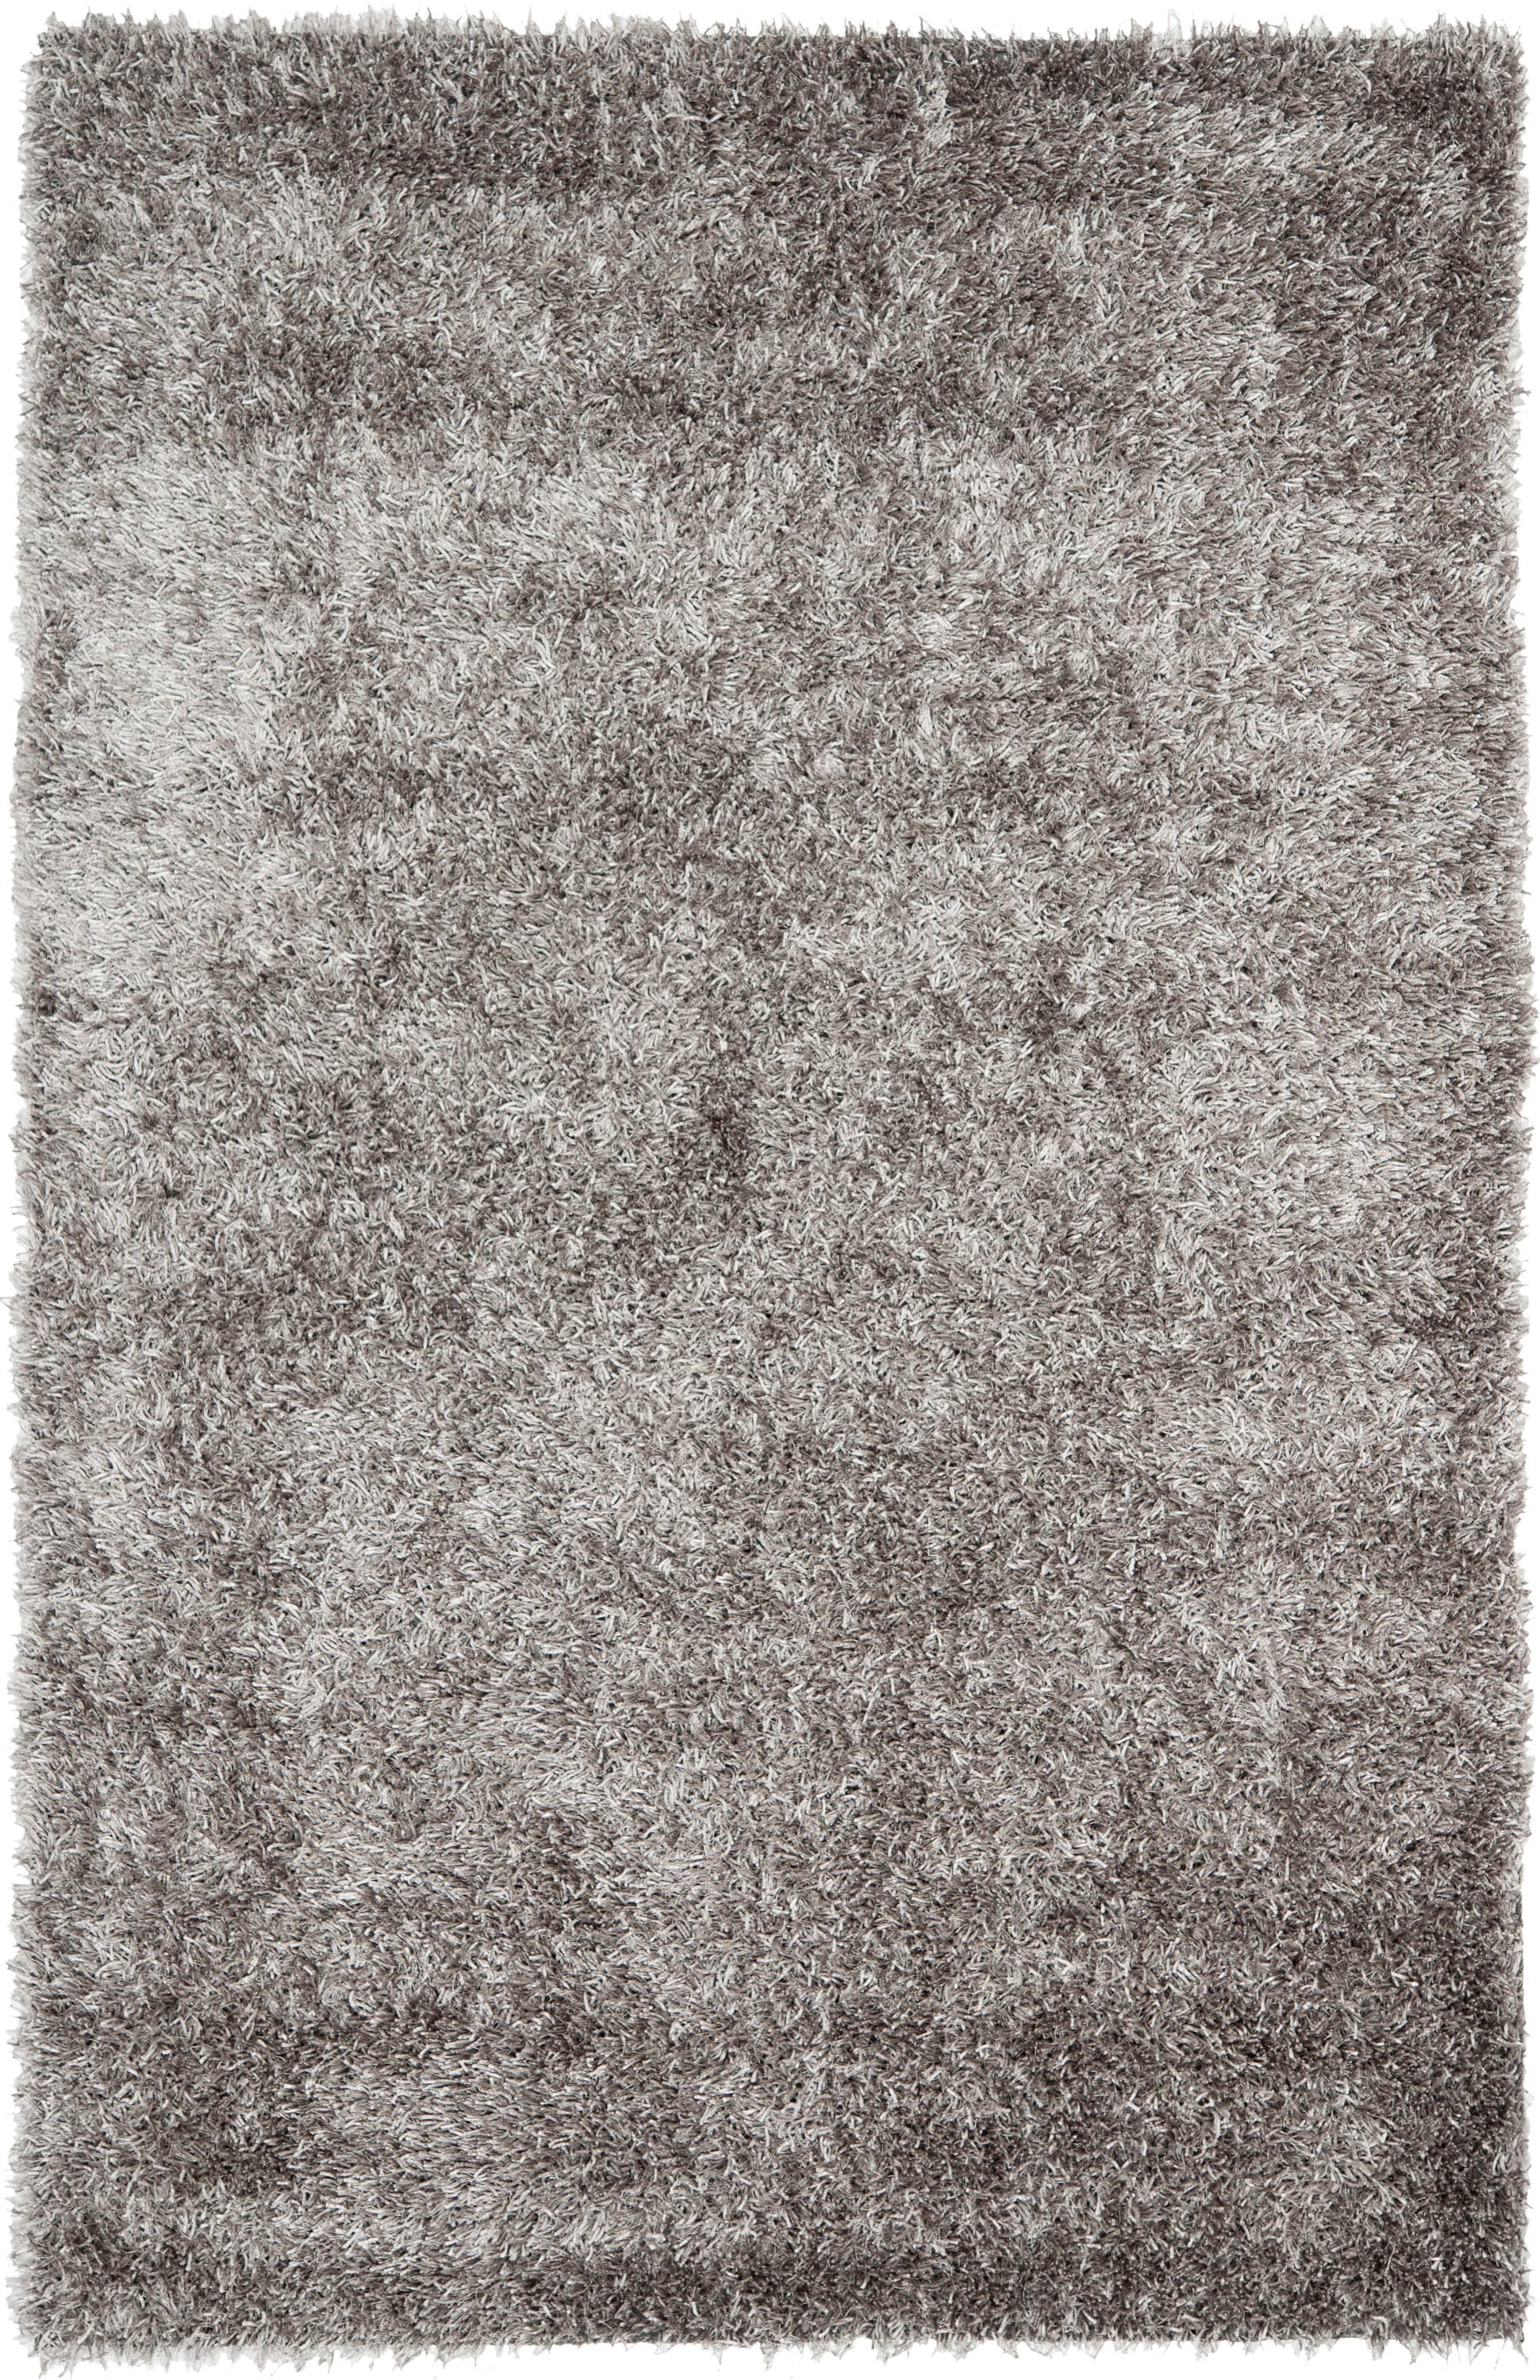 Image of Short gray shag rug